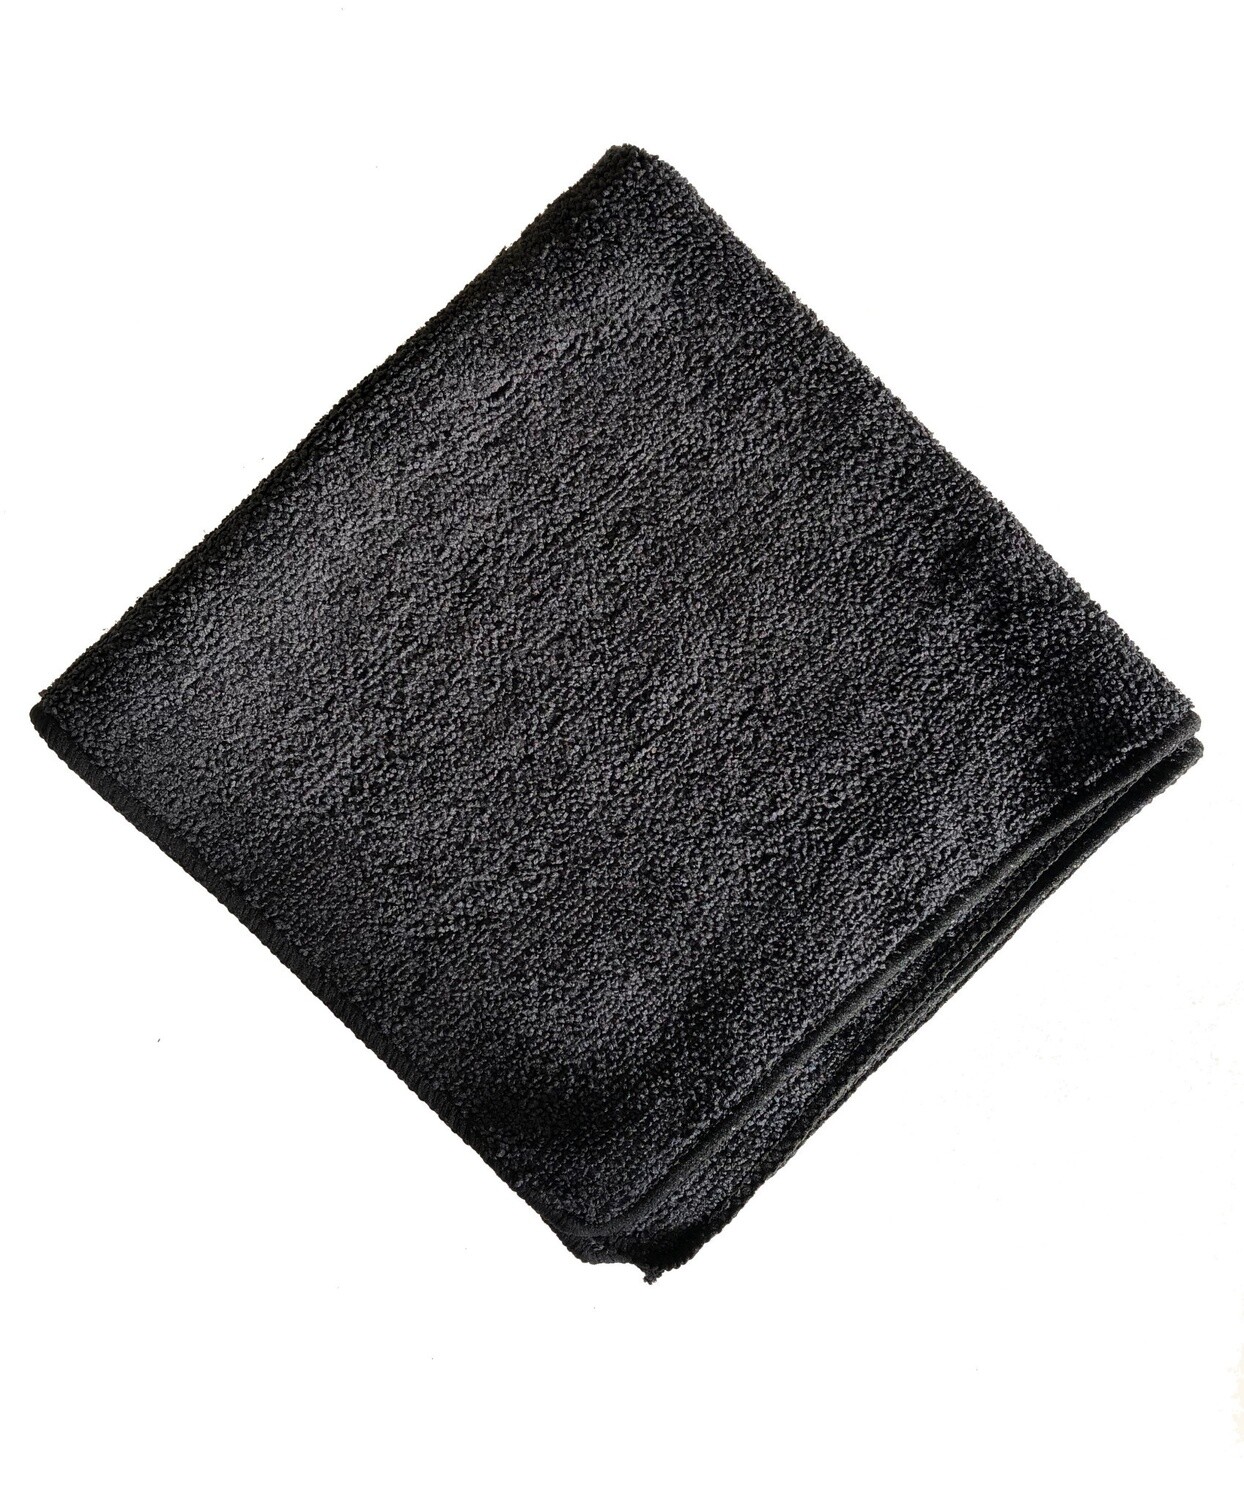 Towel | 16” x 16” Black Microfiber